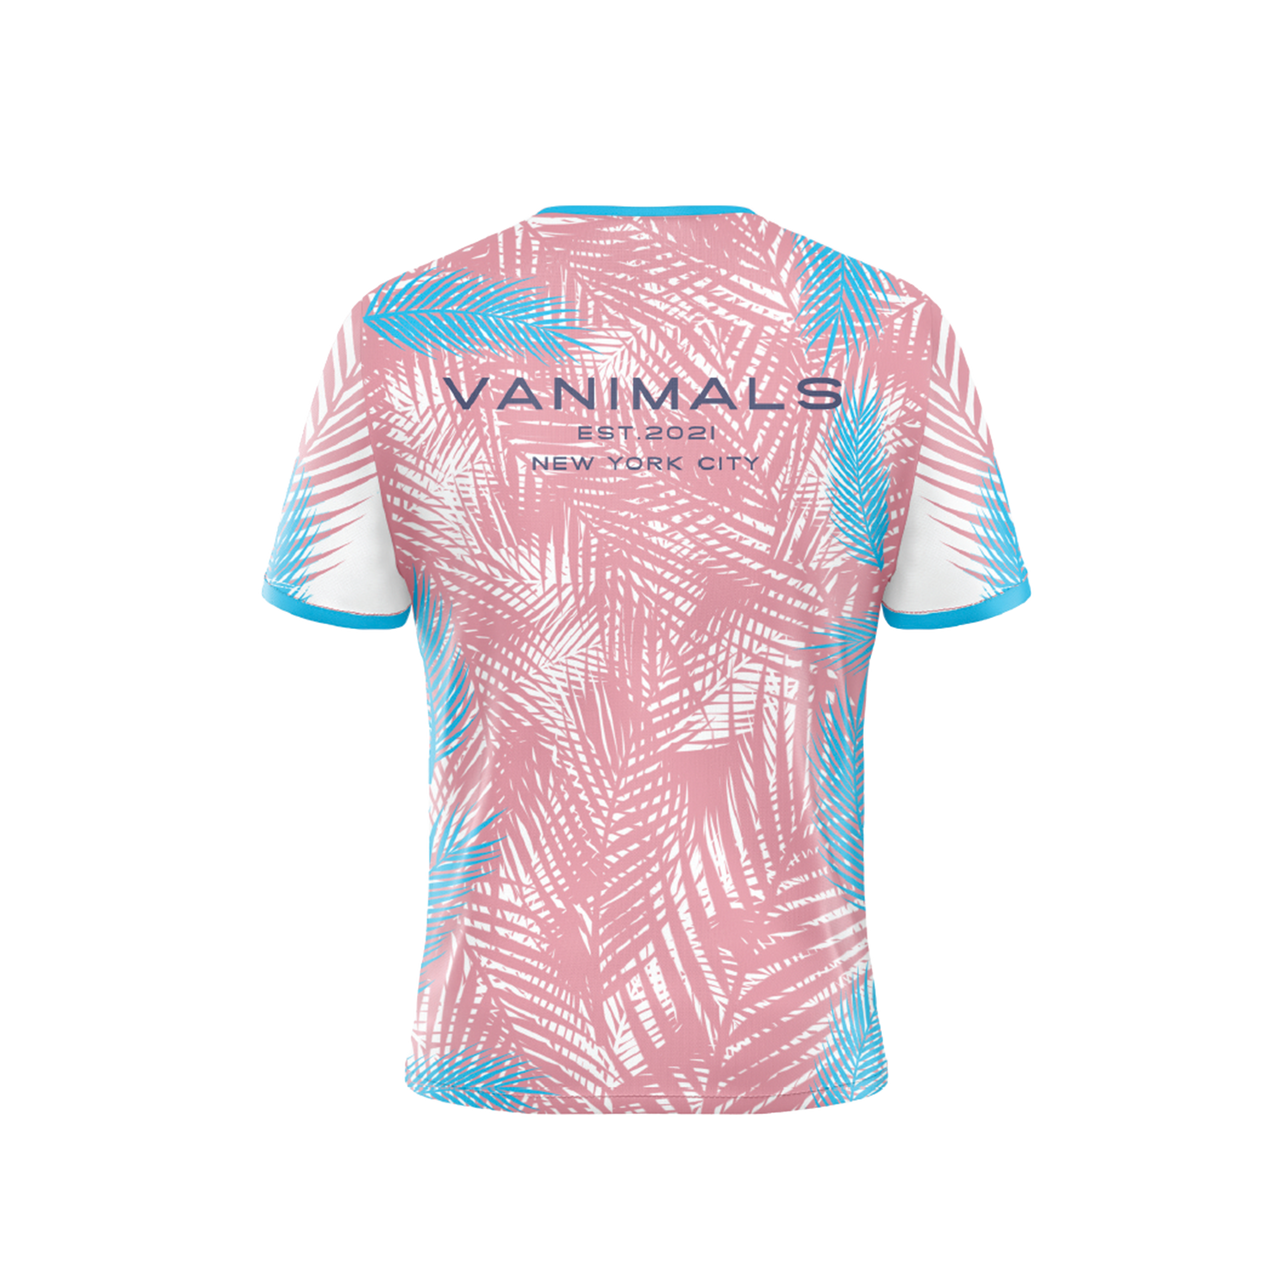 Vanimals Rugby Training T-shirt